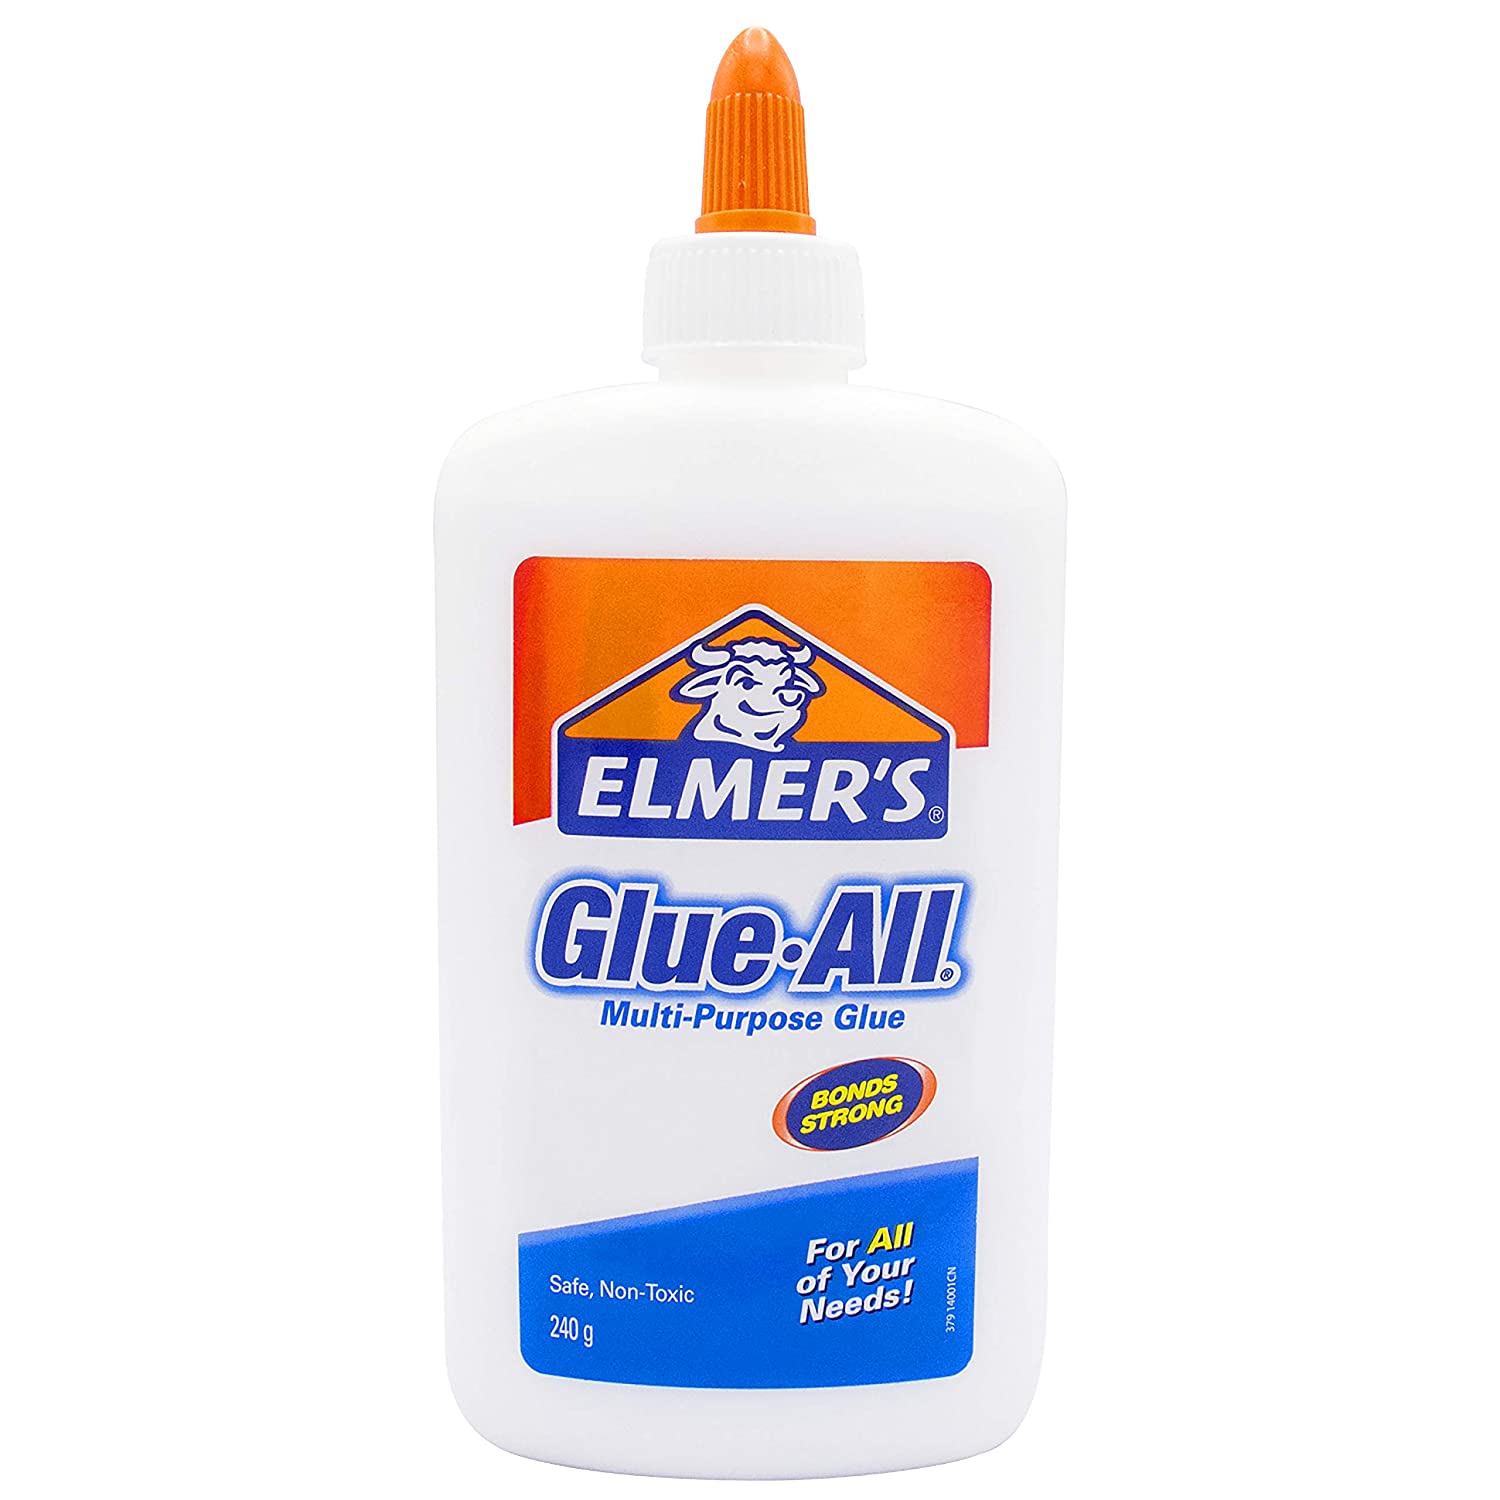 Elmer's Glue-All Multi-Purpose Liquid Glue, Extra Strong, (240 g), Making Slime